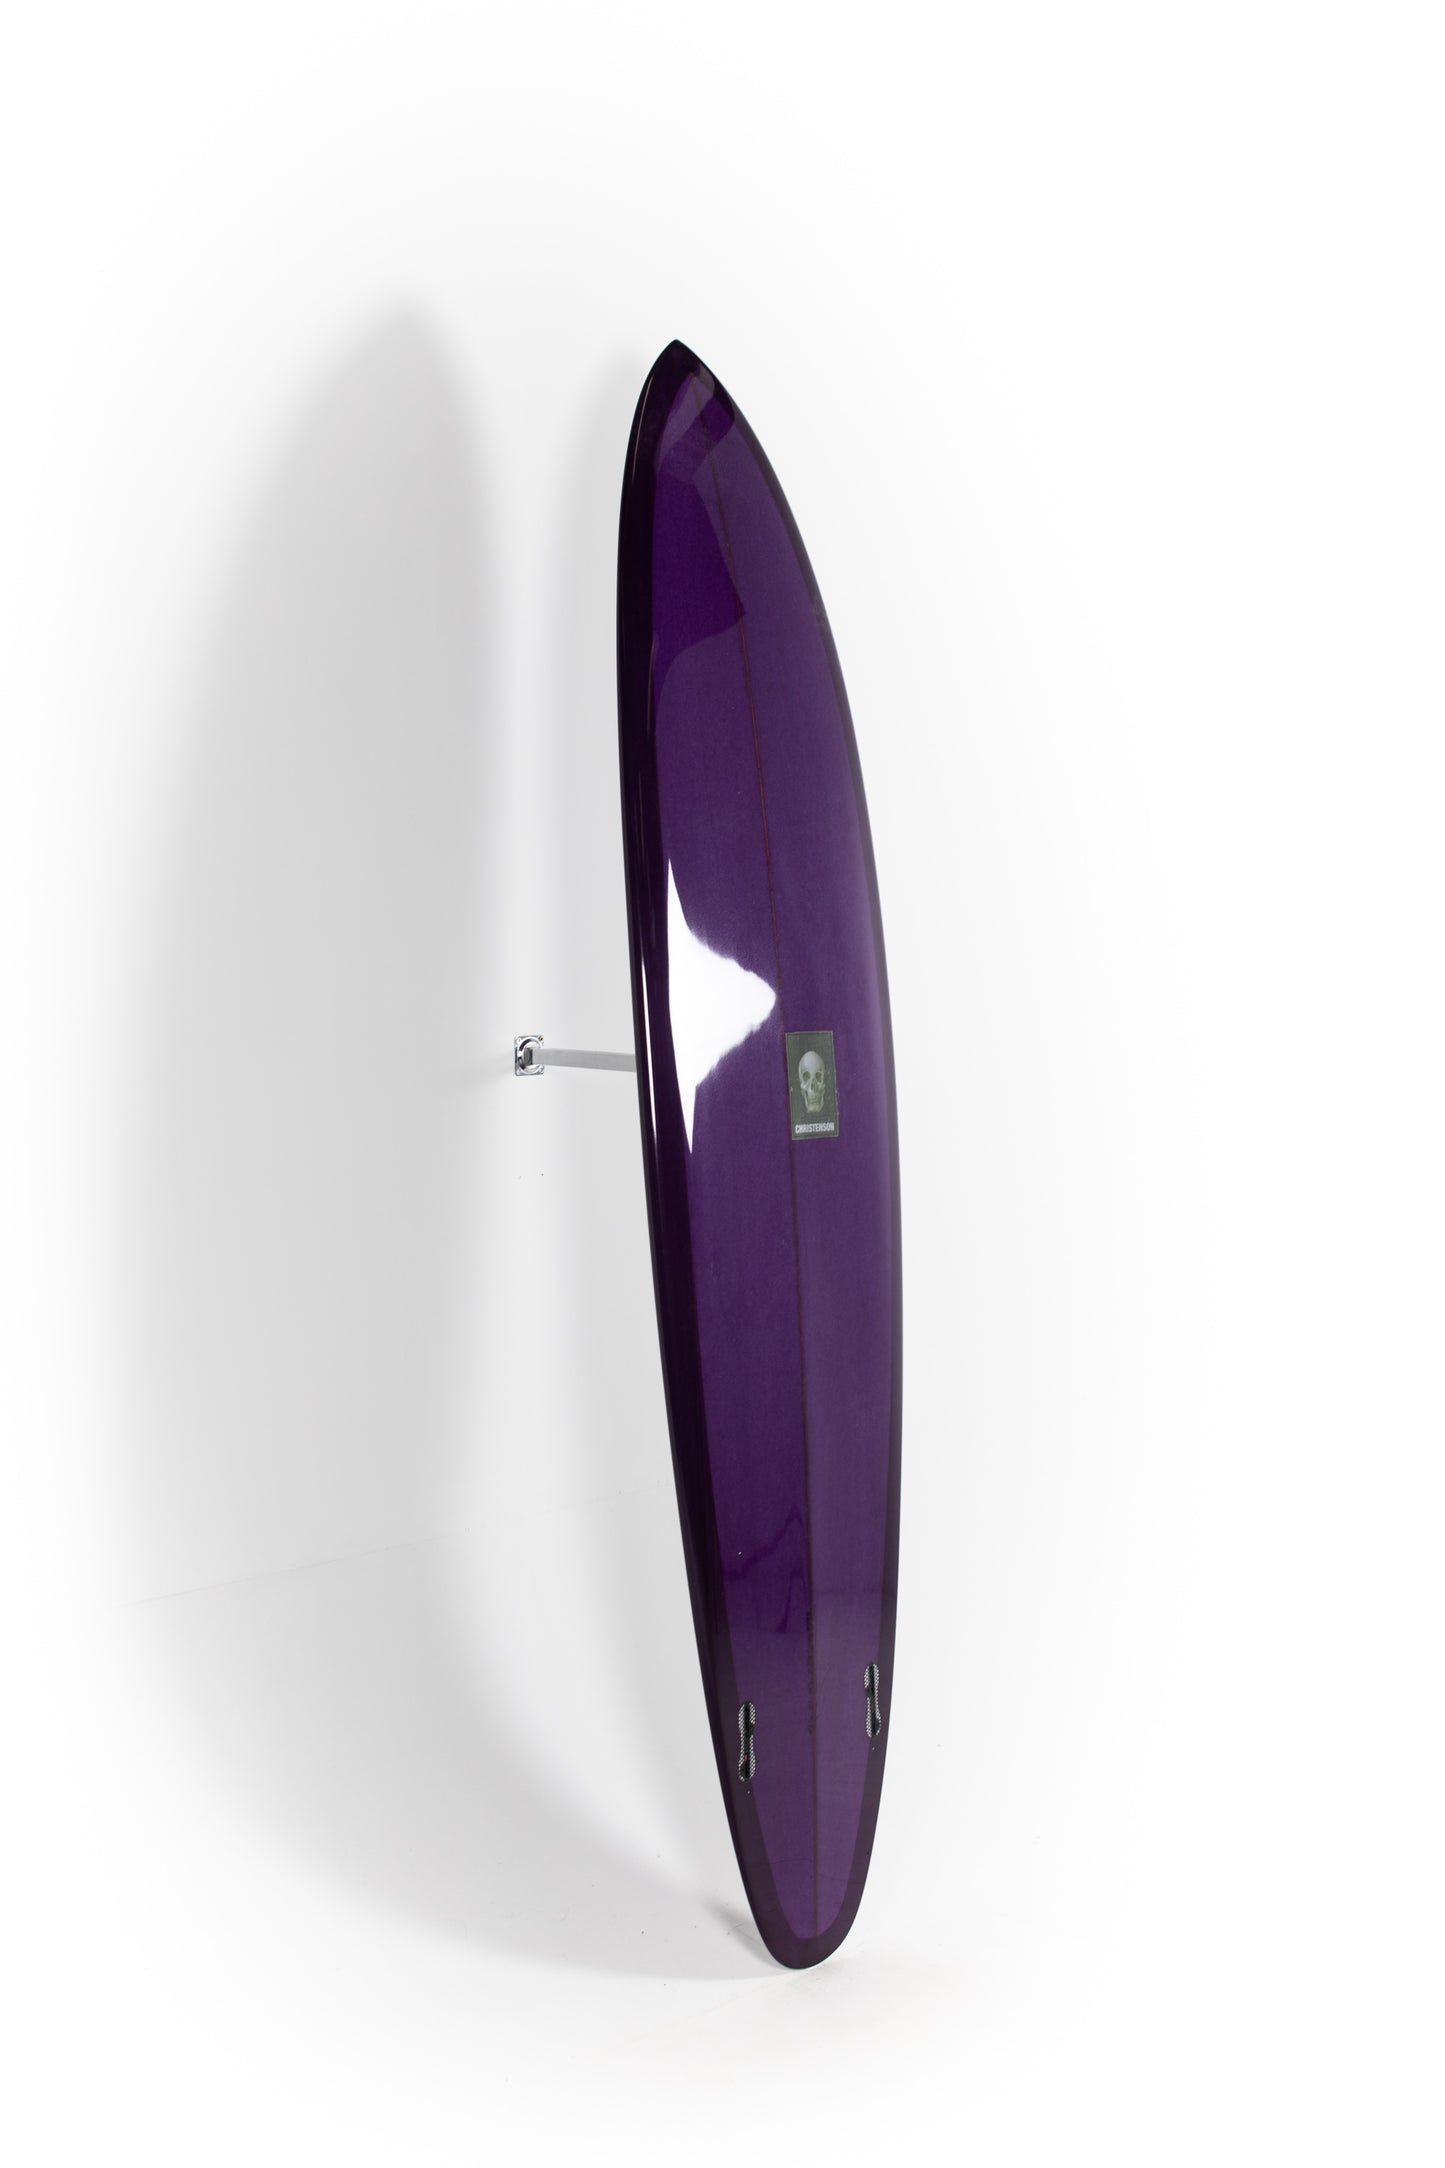 
                  
                    Pukas Surf shop - Christenson Surfboards - TWIN TRACKER - 7'6" x 21 1/4 x 2 7/8 - CX04733v
                  
                